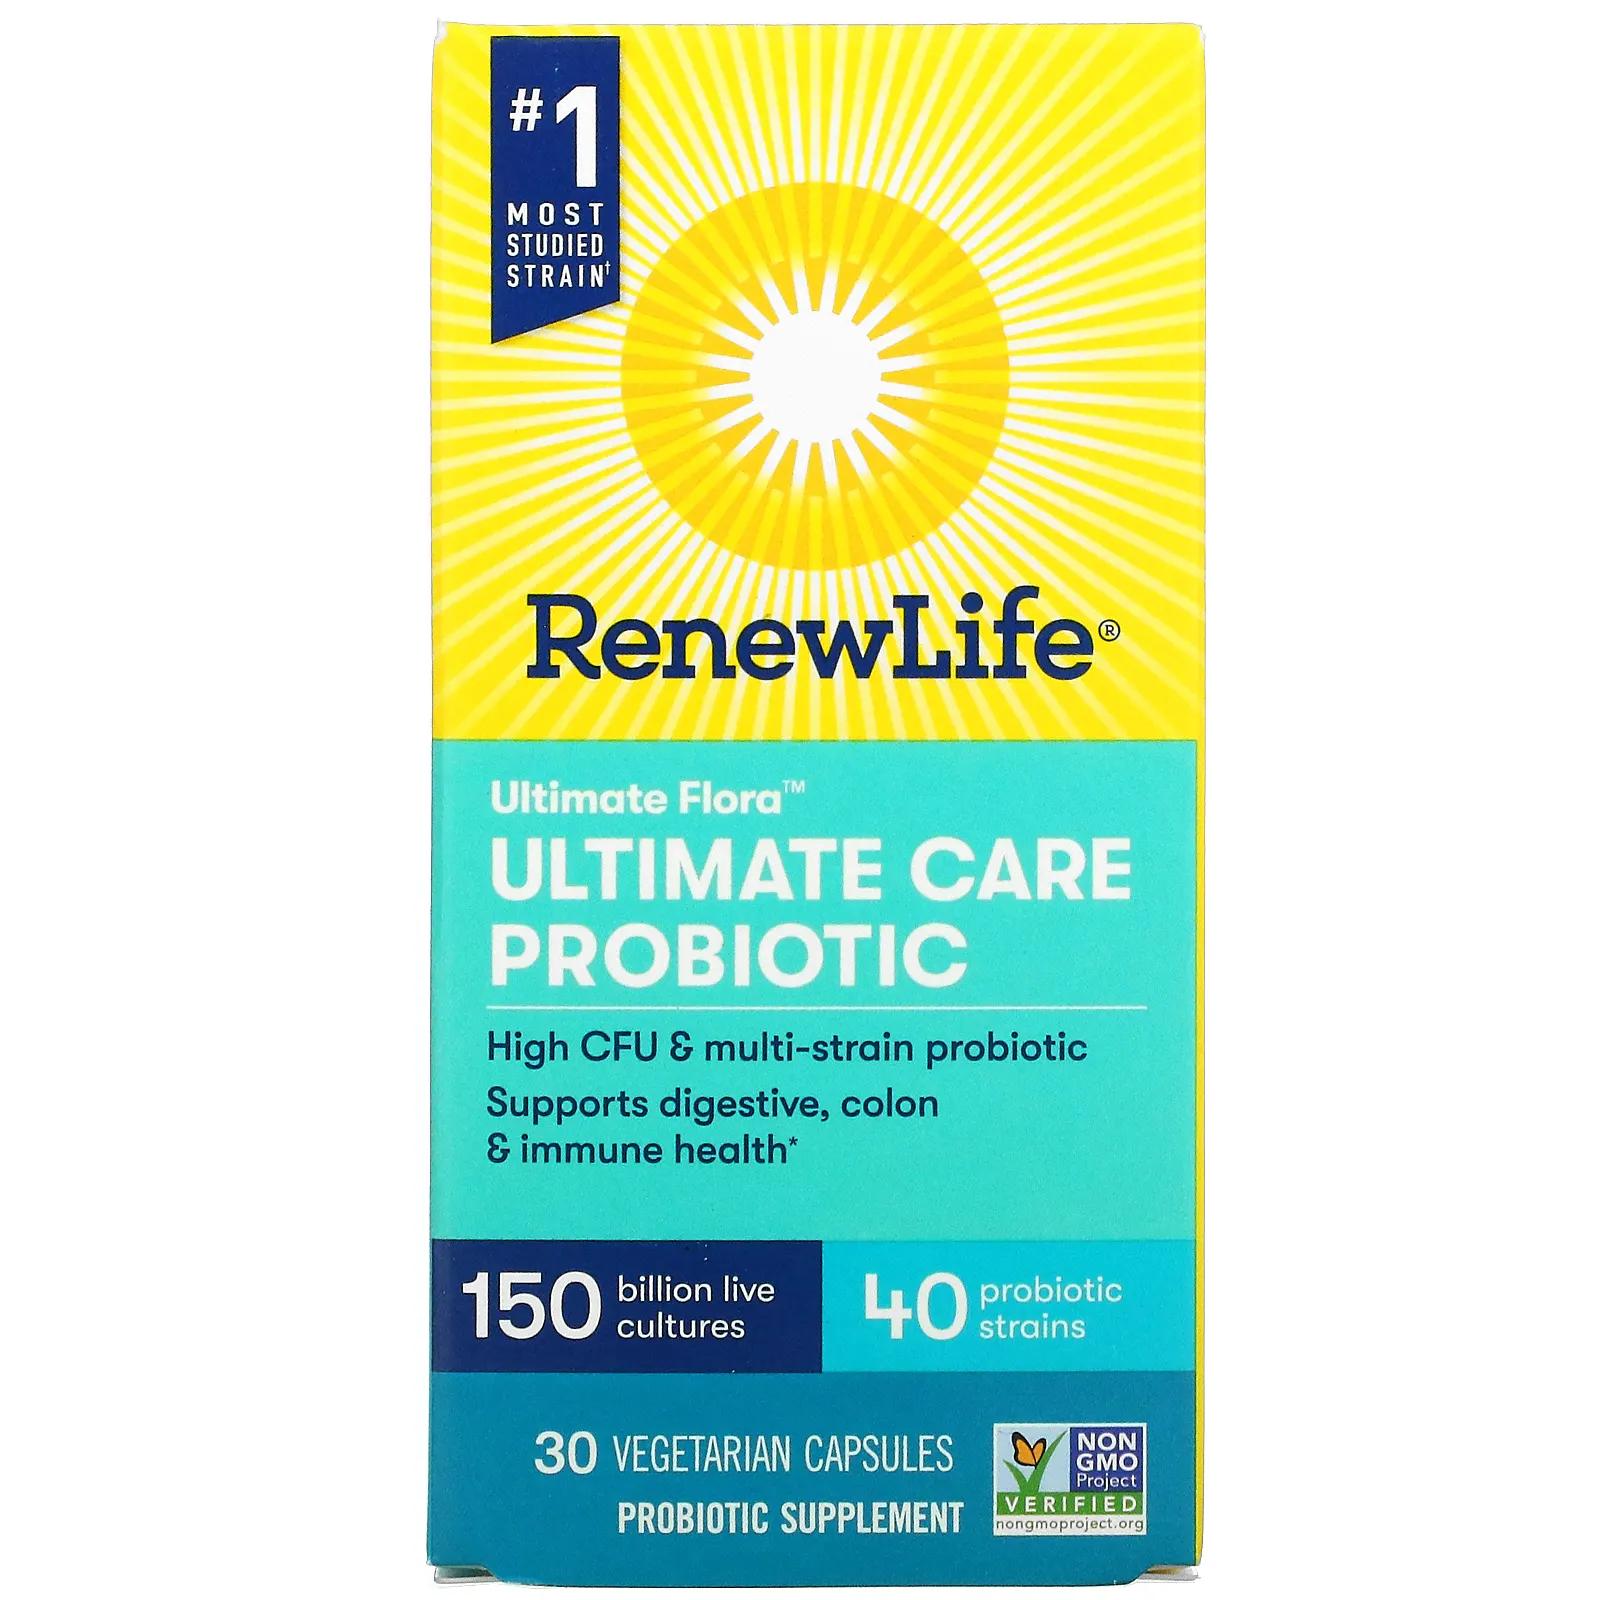 Renew Life Ultimate Flora Ultimate Care Probiotic 150 Billion Live Cultures 30 Vegetarian Capsules